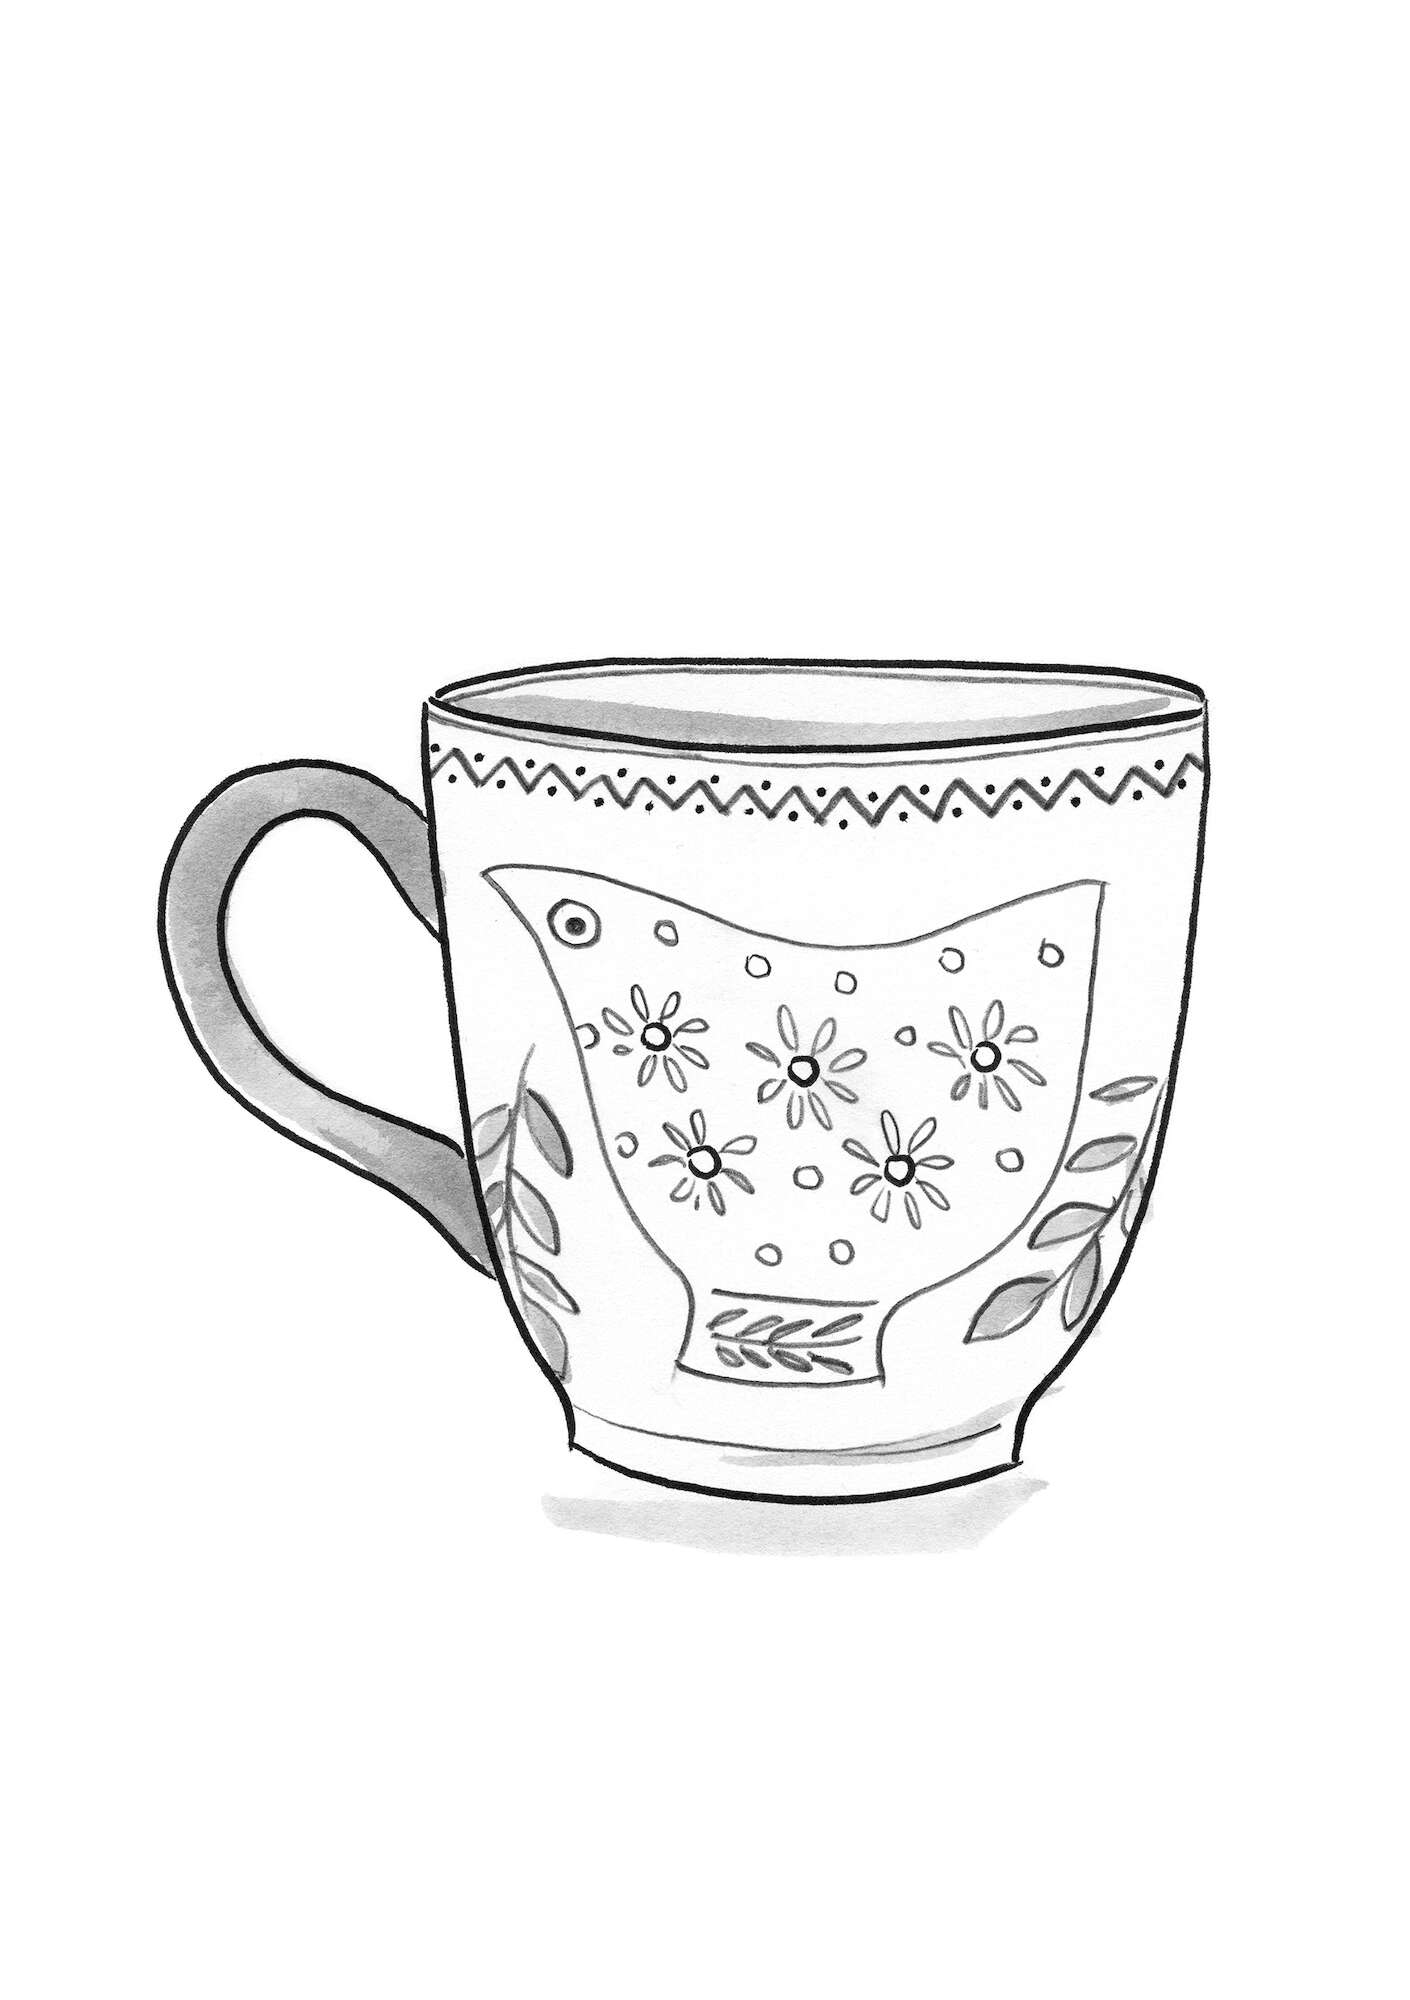 “Okarina” ceramic teacup heather